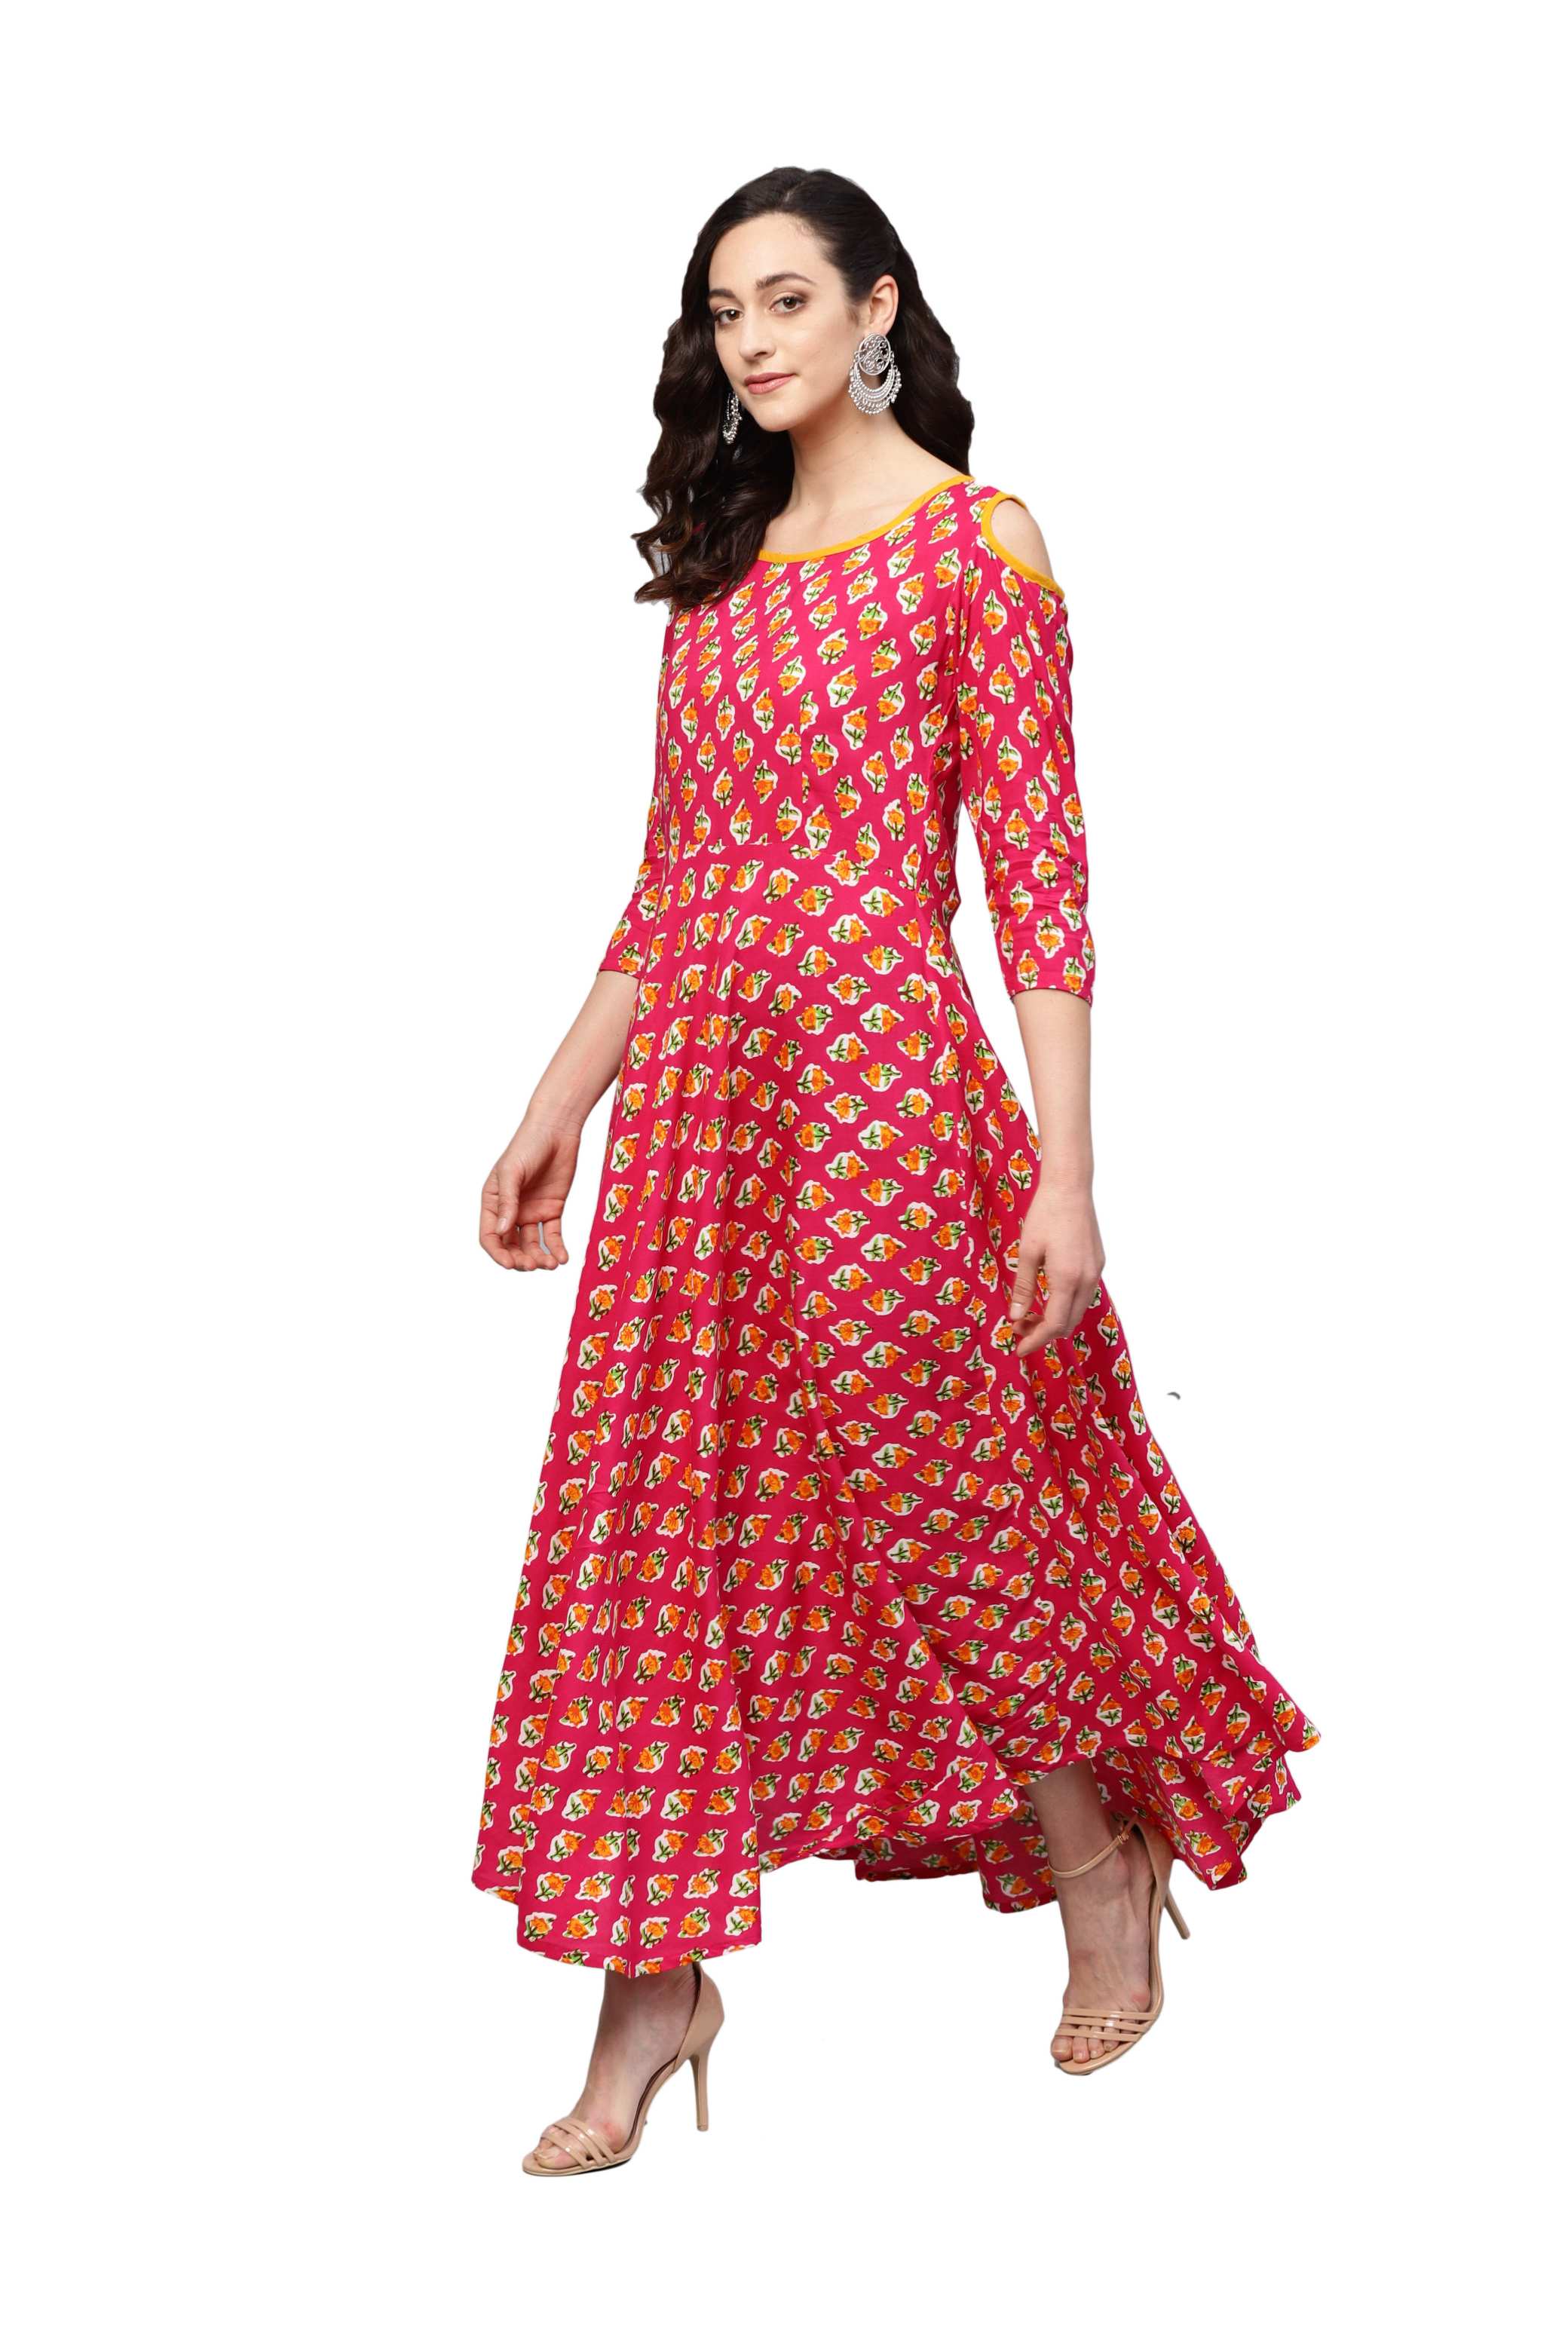 Women's Red Rayon Printed 3/4 Sleeve Round Neck Dress - Myshka